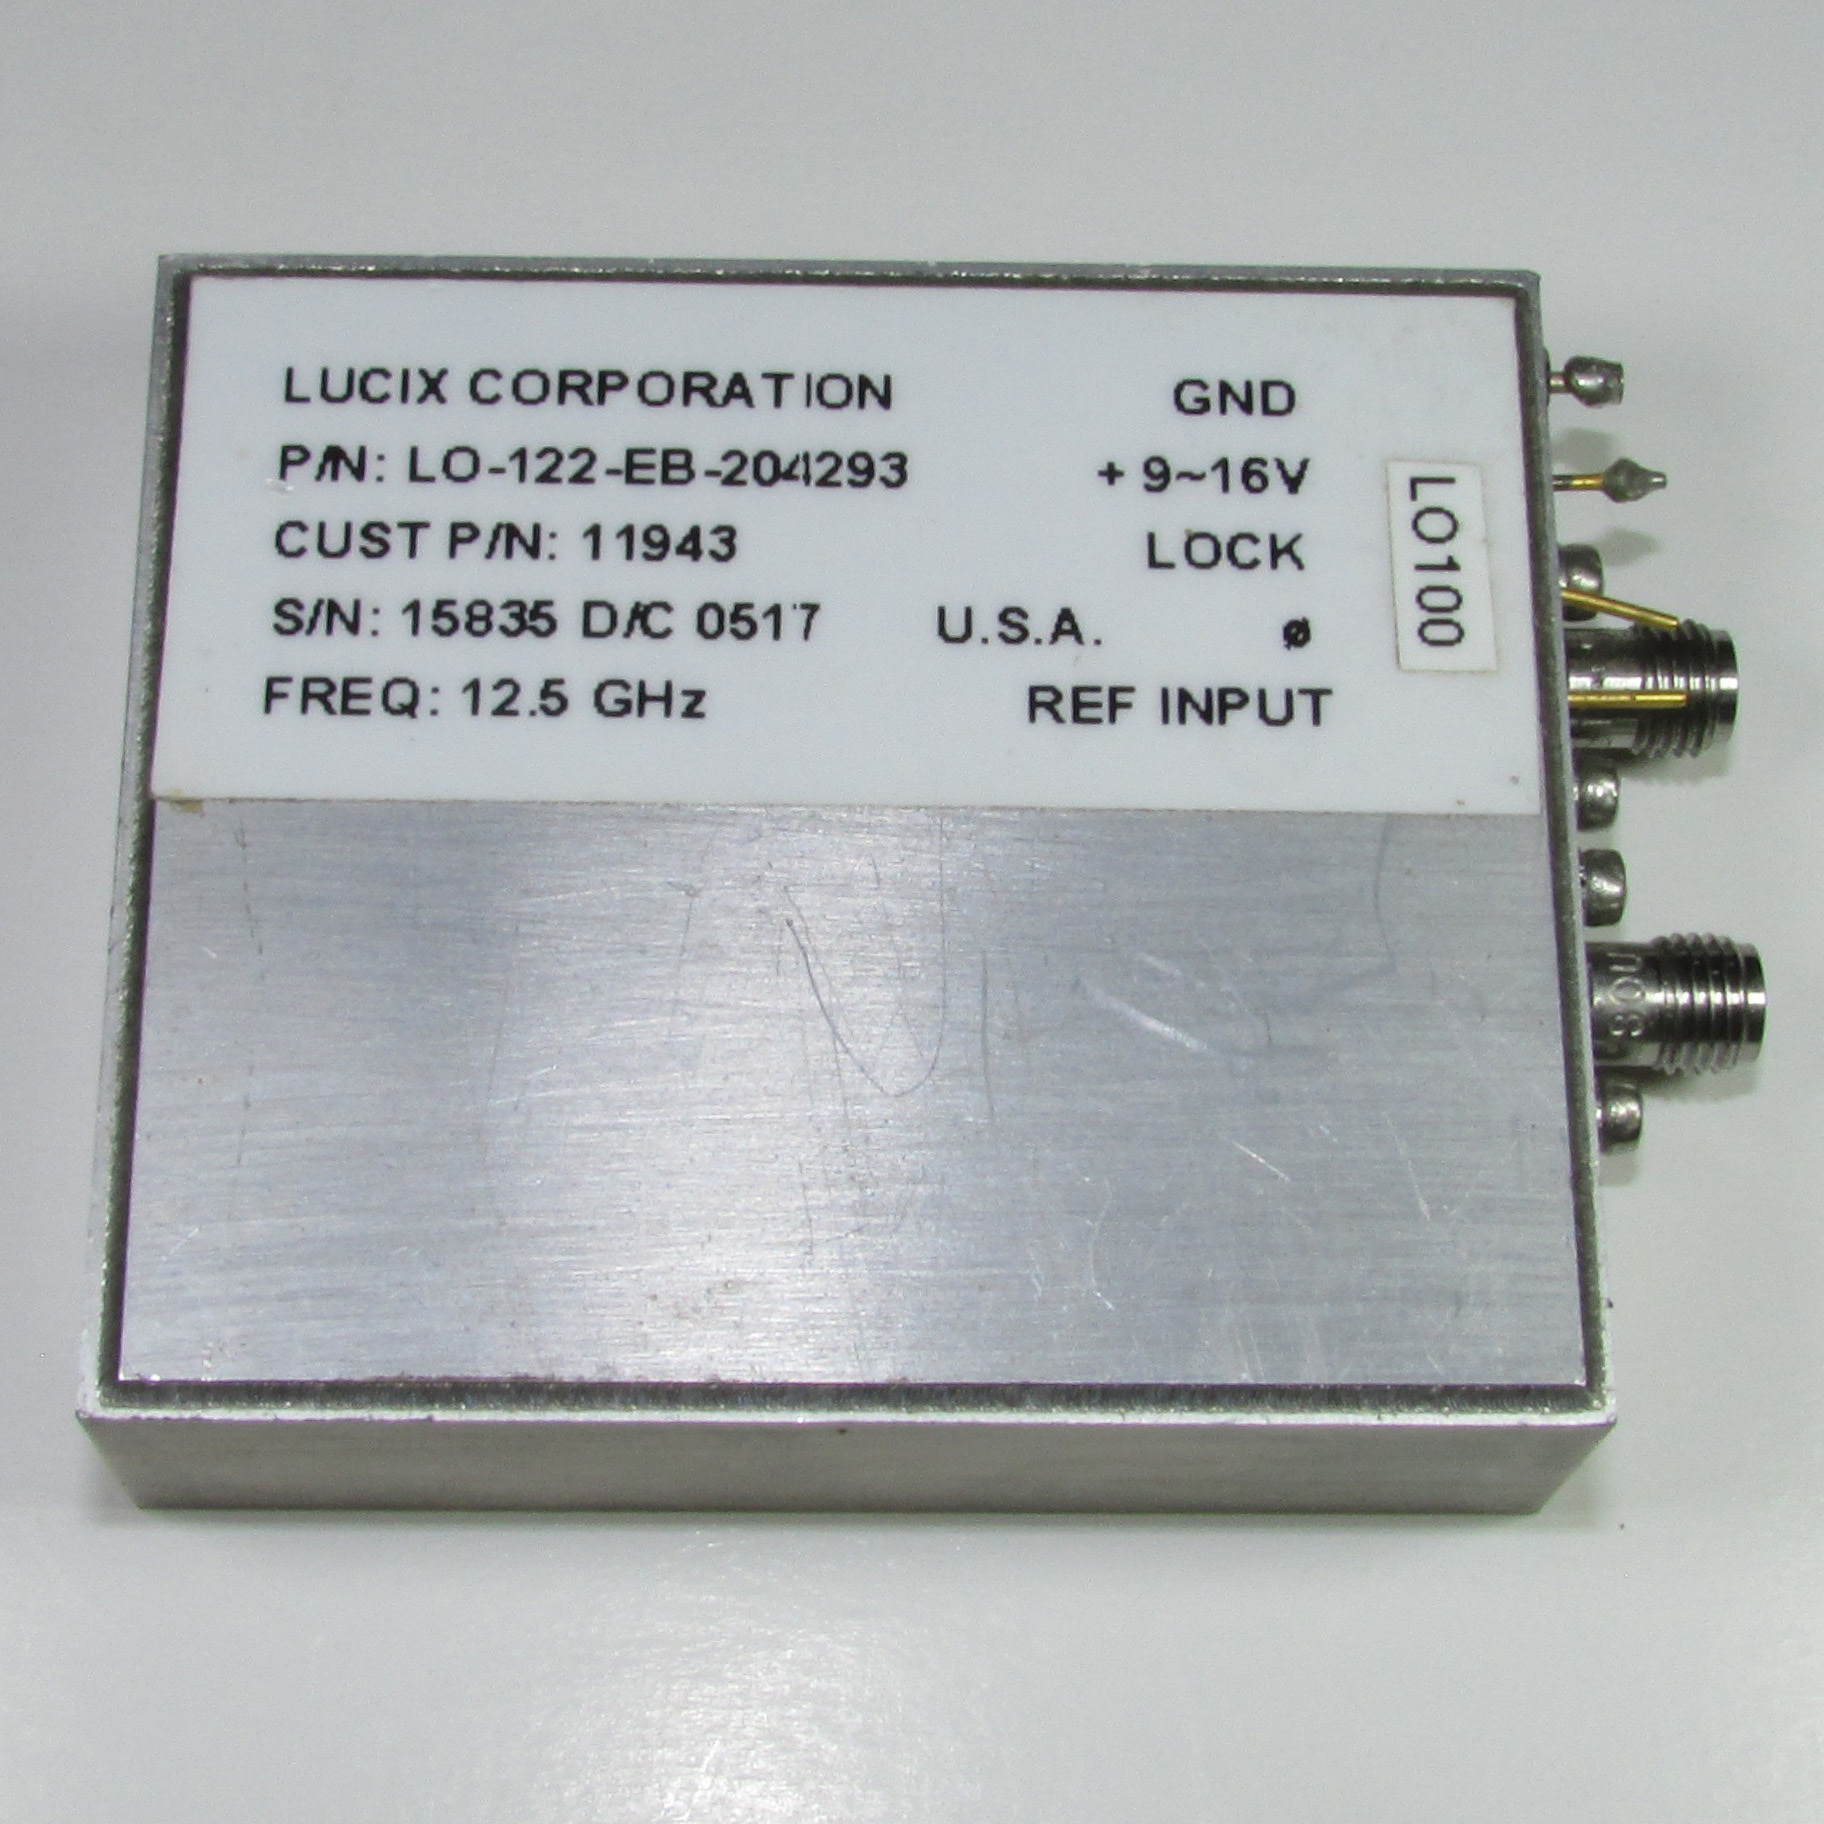 LUCIX LO-122-EB-204293 12.5GHz Microwave Oscillator / Phase Locked DROs